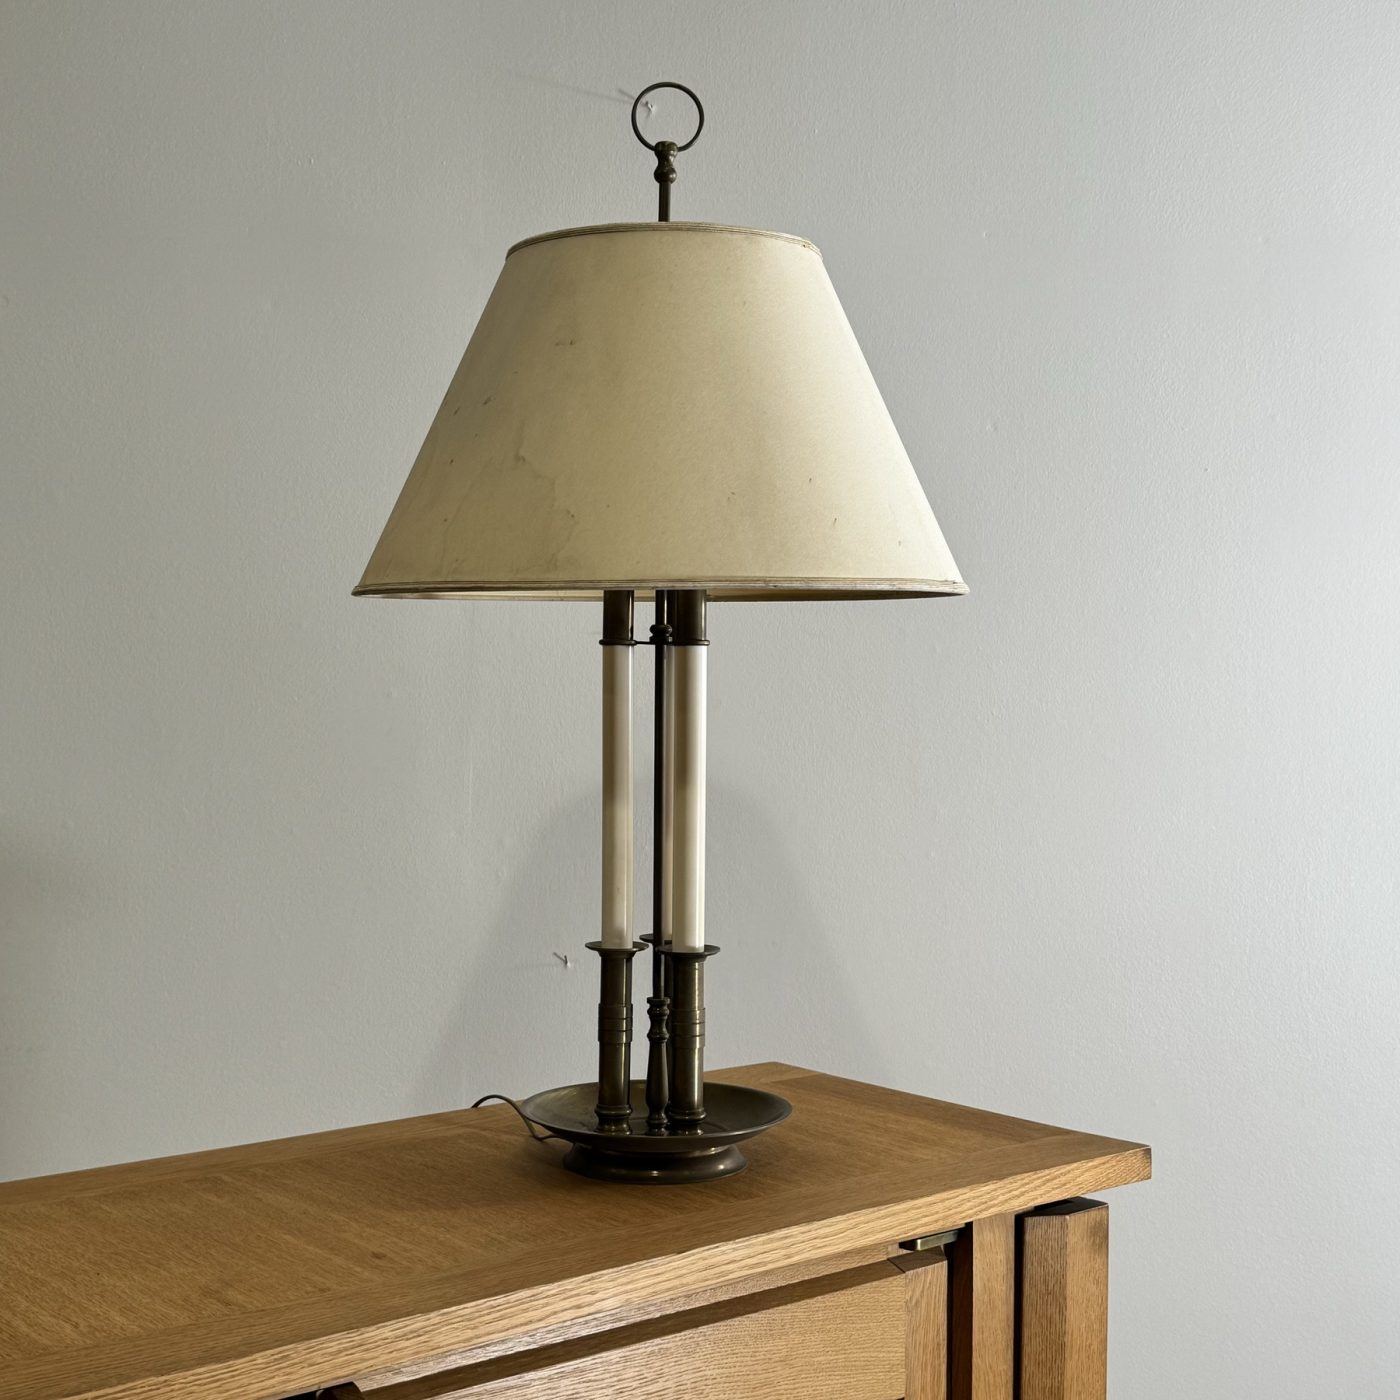 objet-vagabond-1950-lamp0000